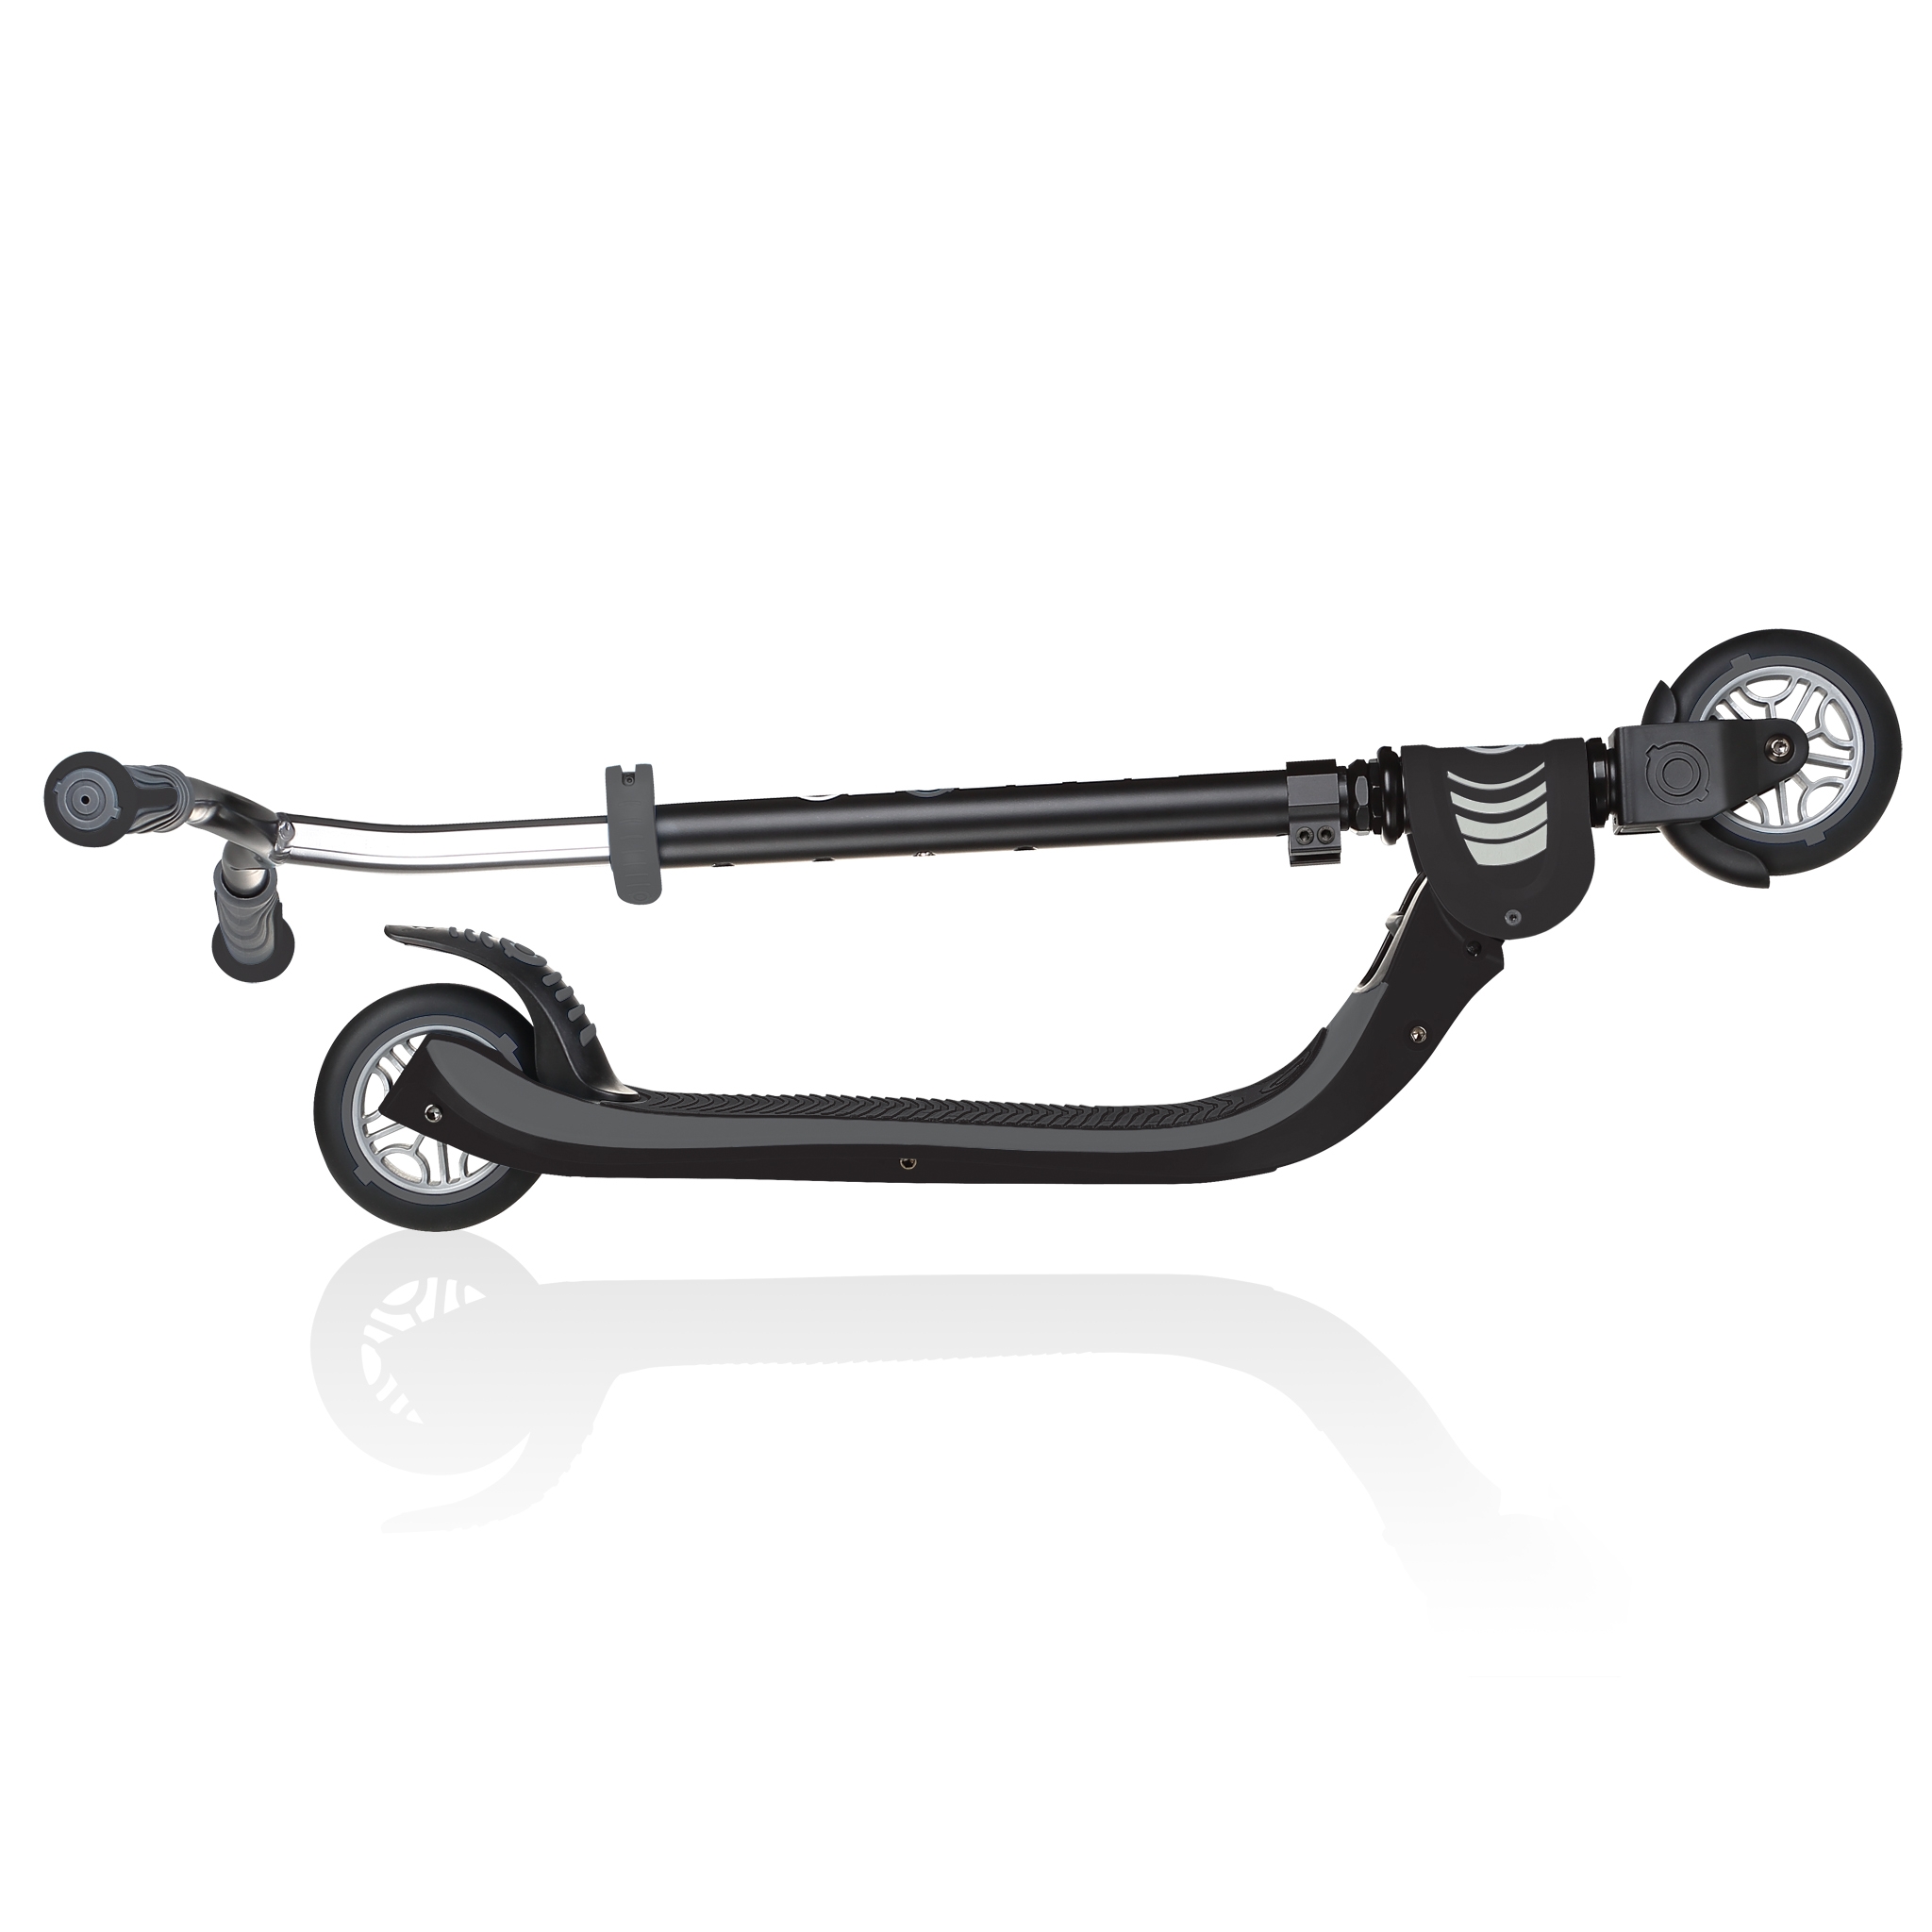 FLOW-FOLDABLE-125-2-wheel-foldable-scooter-for-kids-black 1